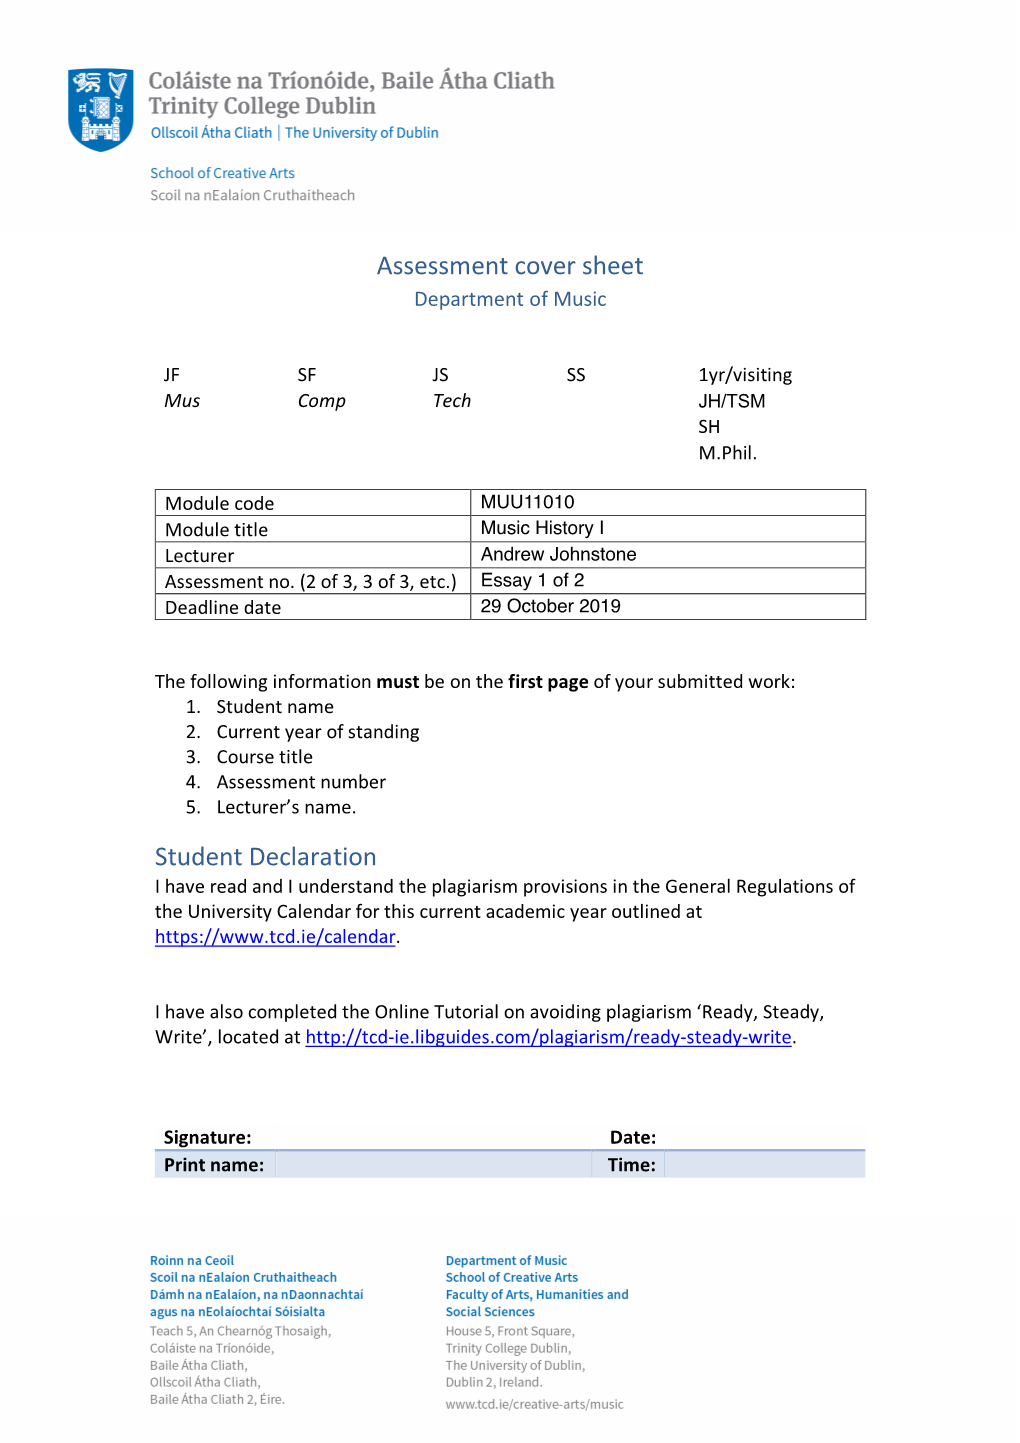 Assessment Cover Sheet Student Declaration